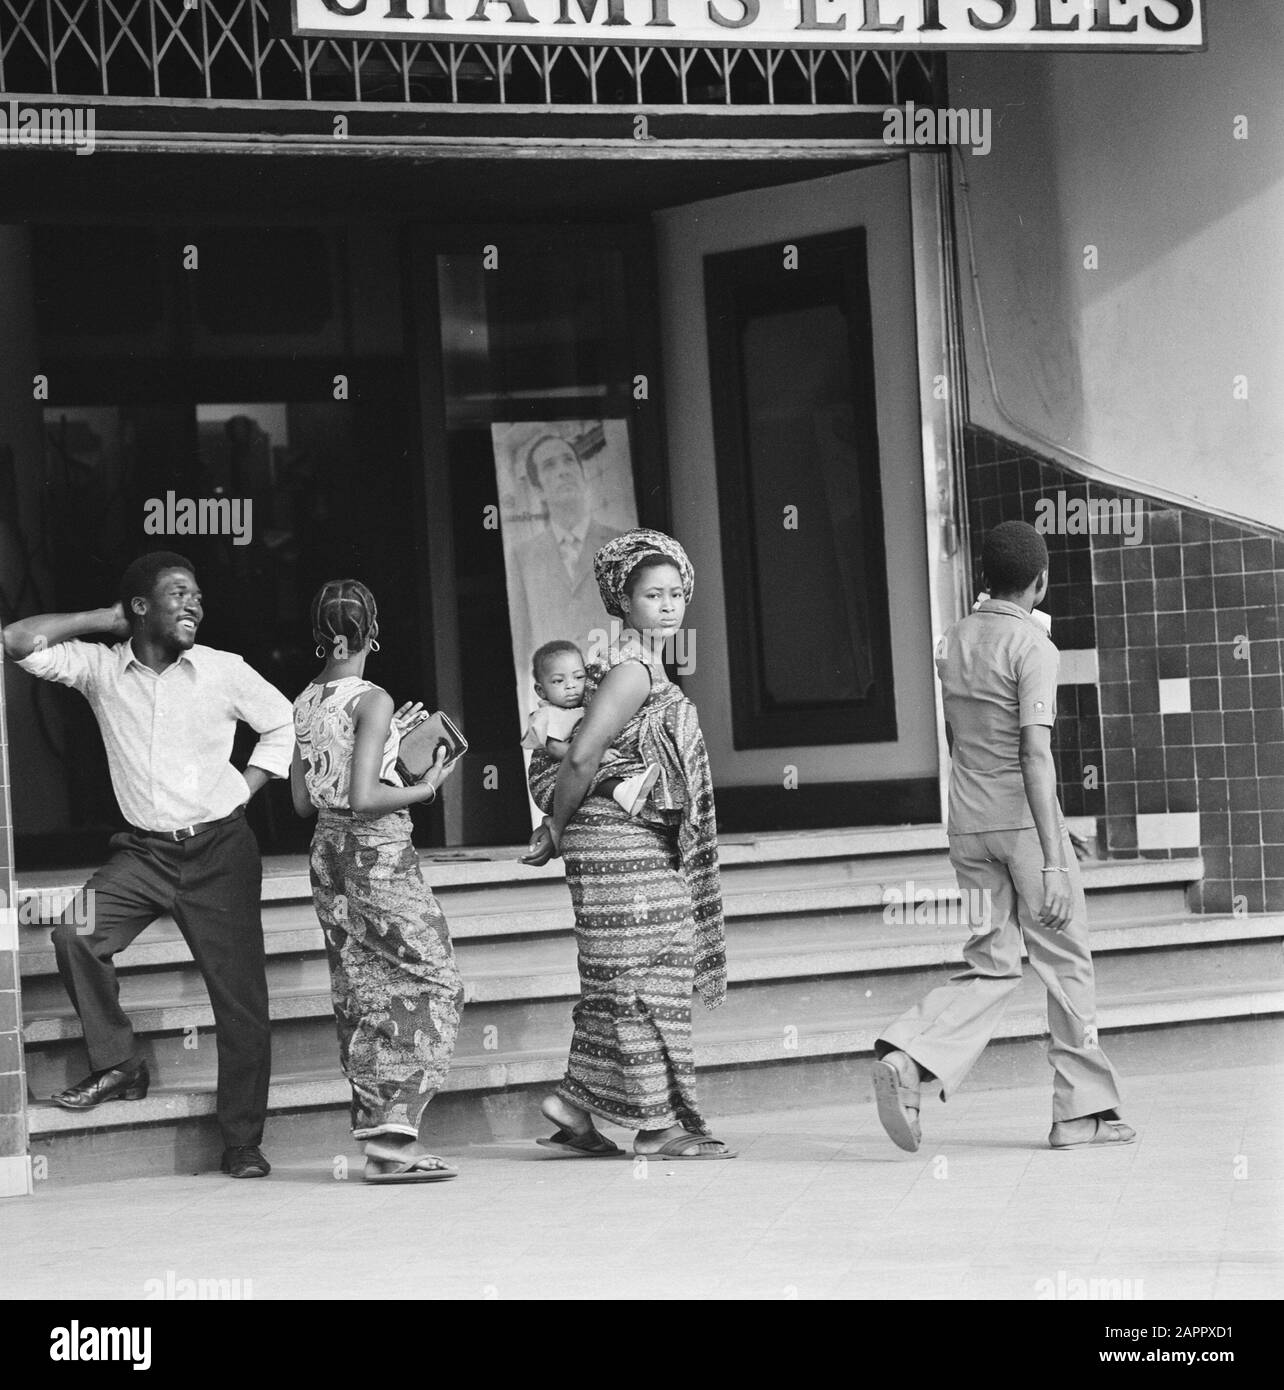 Zaire (ehemals Belgischer Kongo) Statue in Kinshasa Datum: 24. Oktober 1973 Ort: Kongo, Kinshasa, Zaire Schlüsselwörter: Kongolesen, Stadtansichten, Frauen Stockfoto